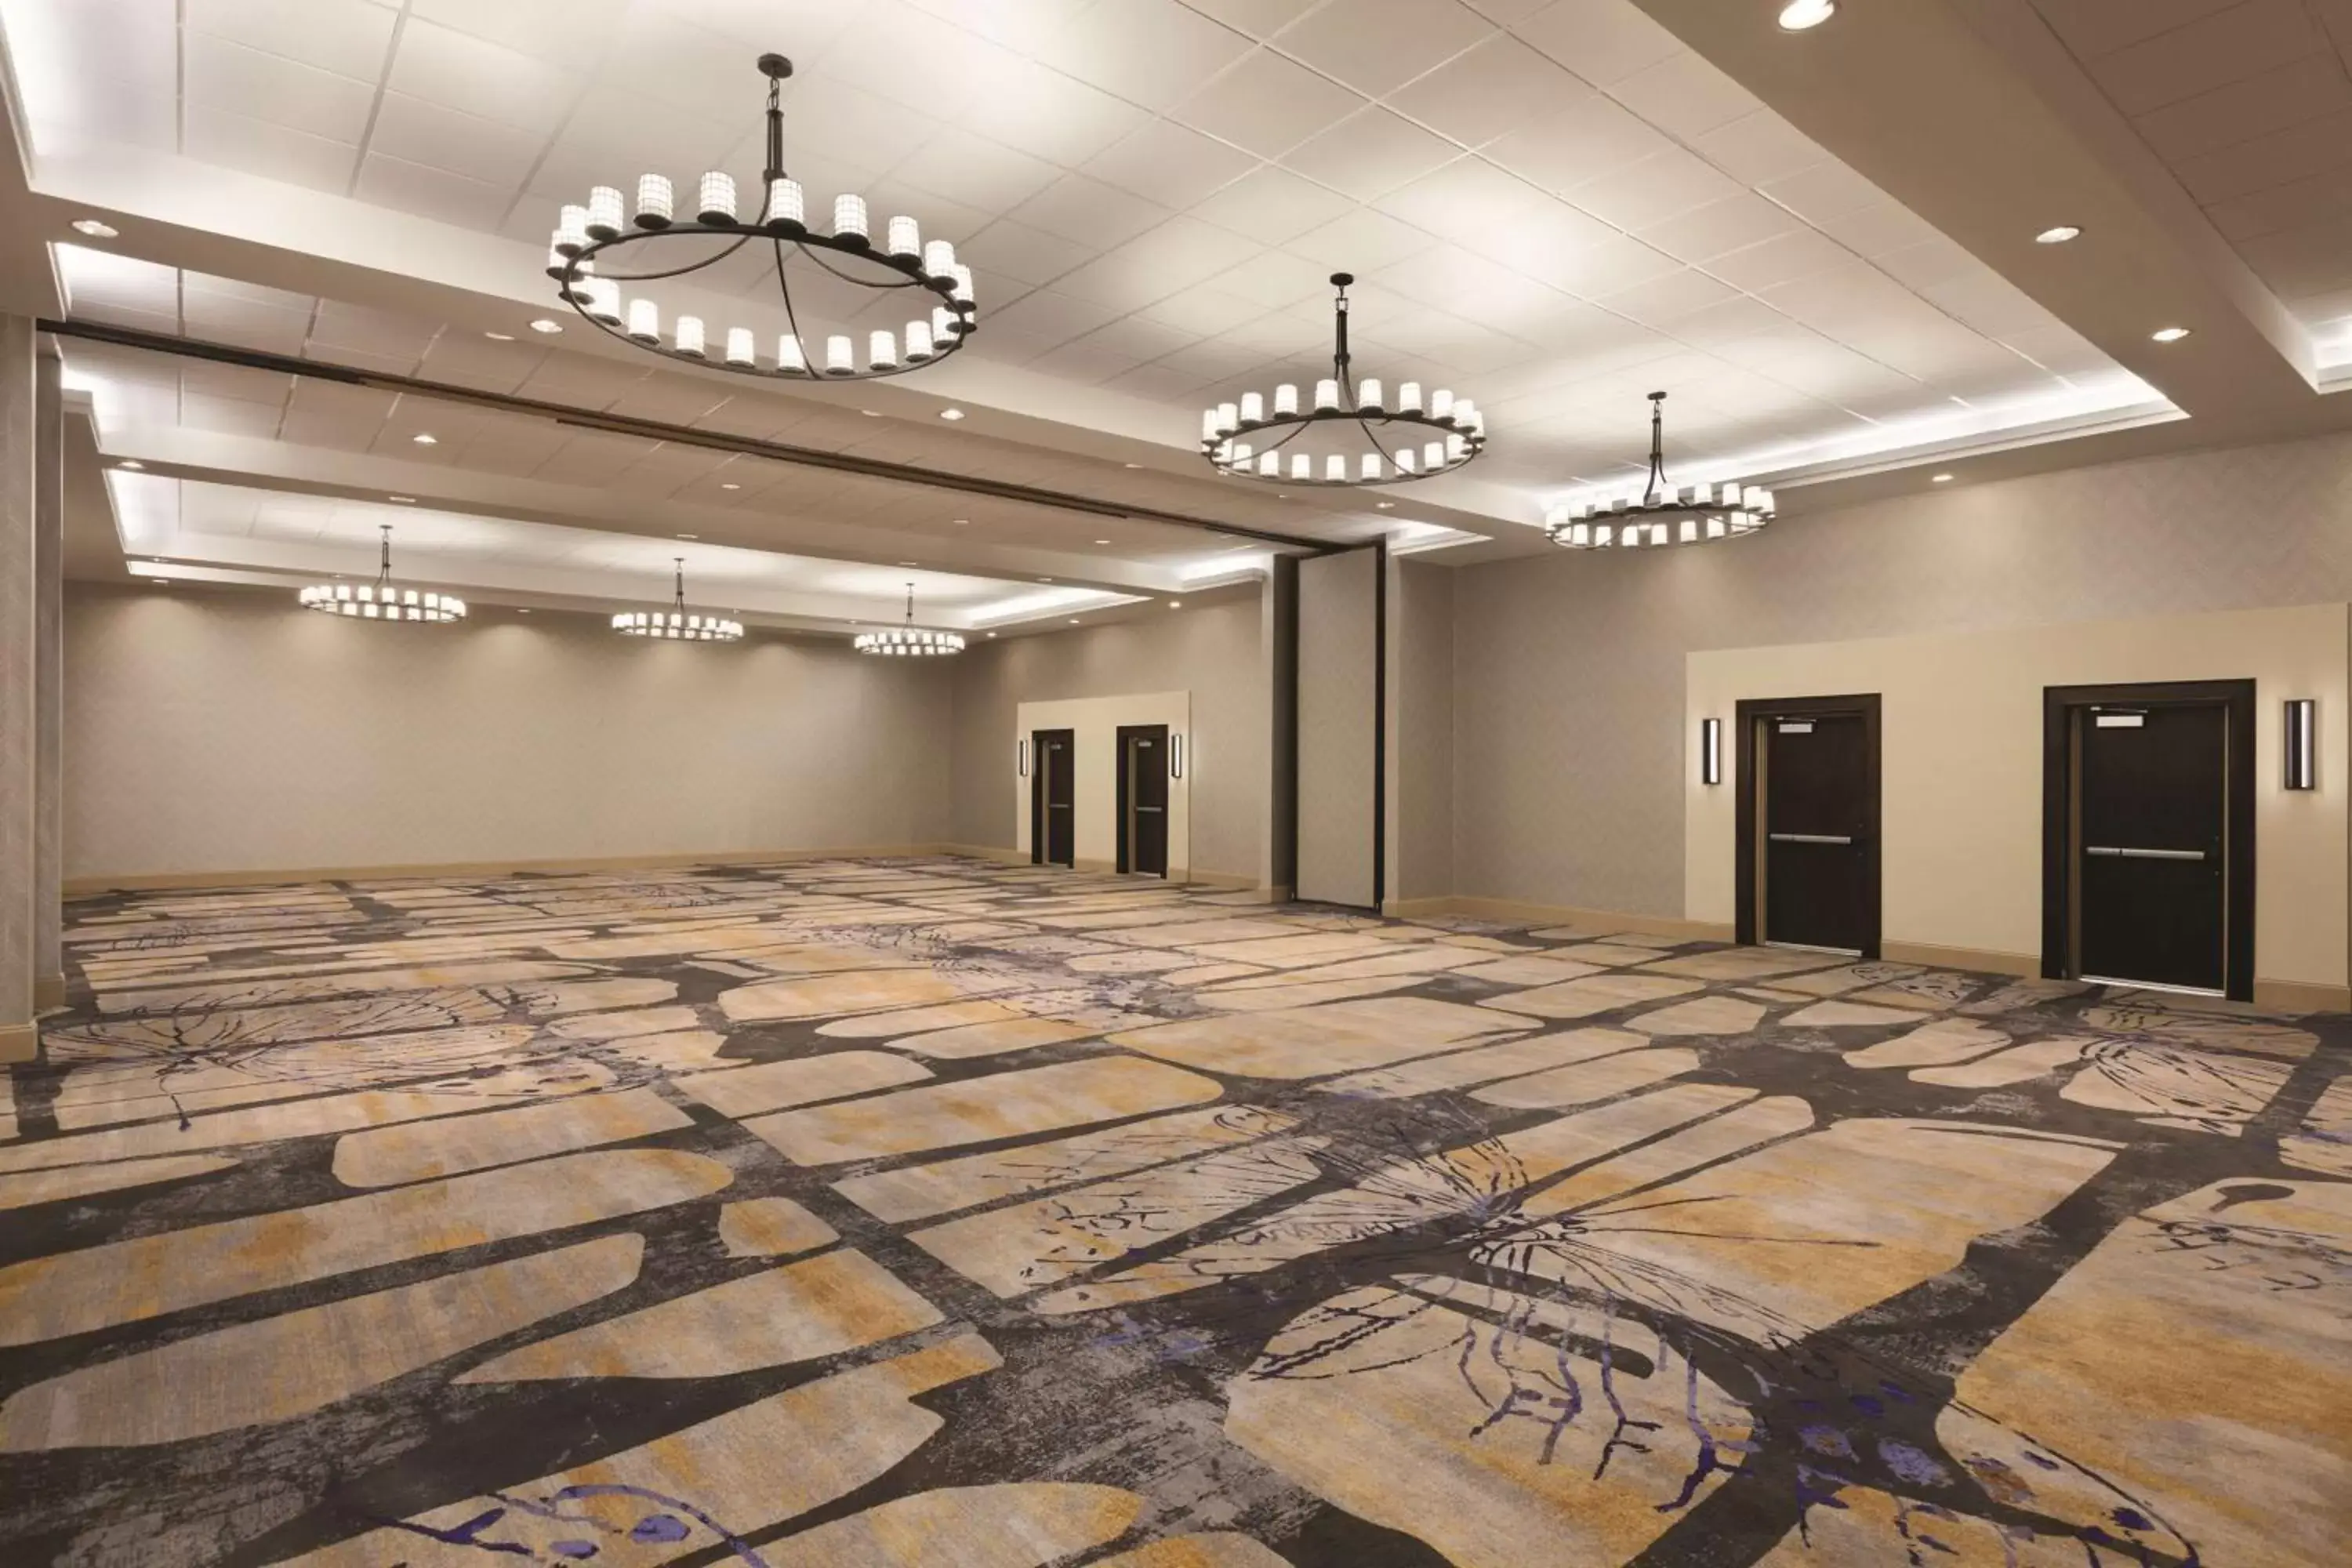 Meeting/conference room in Hilton Scottsdale Resort & Villas